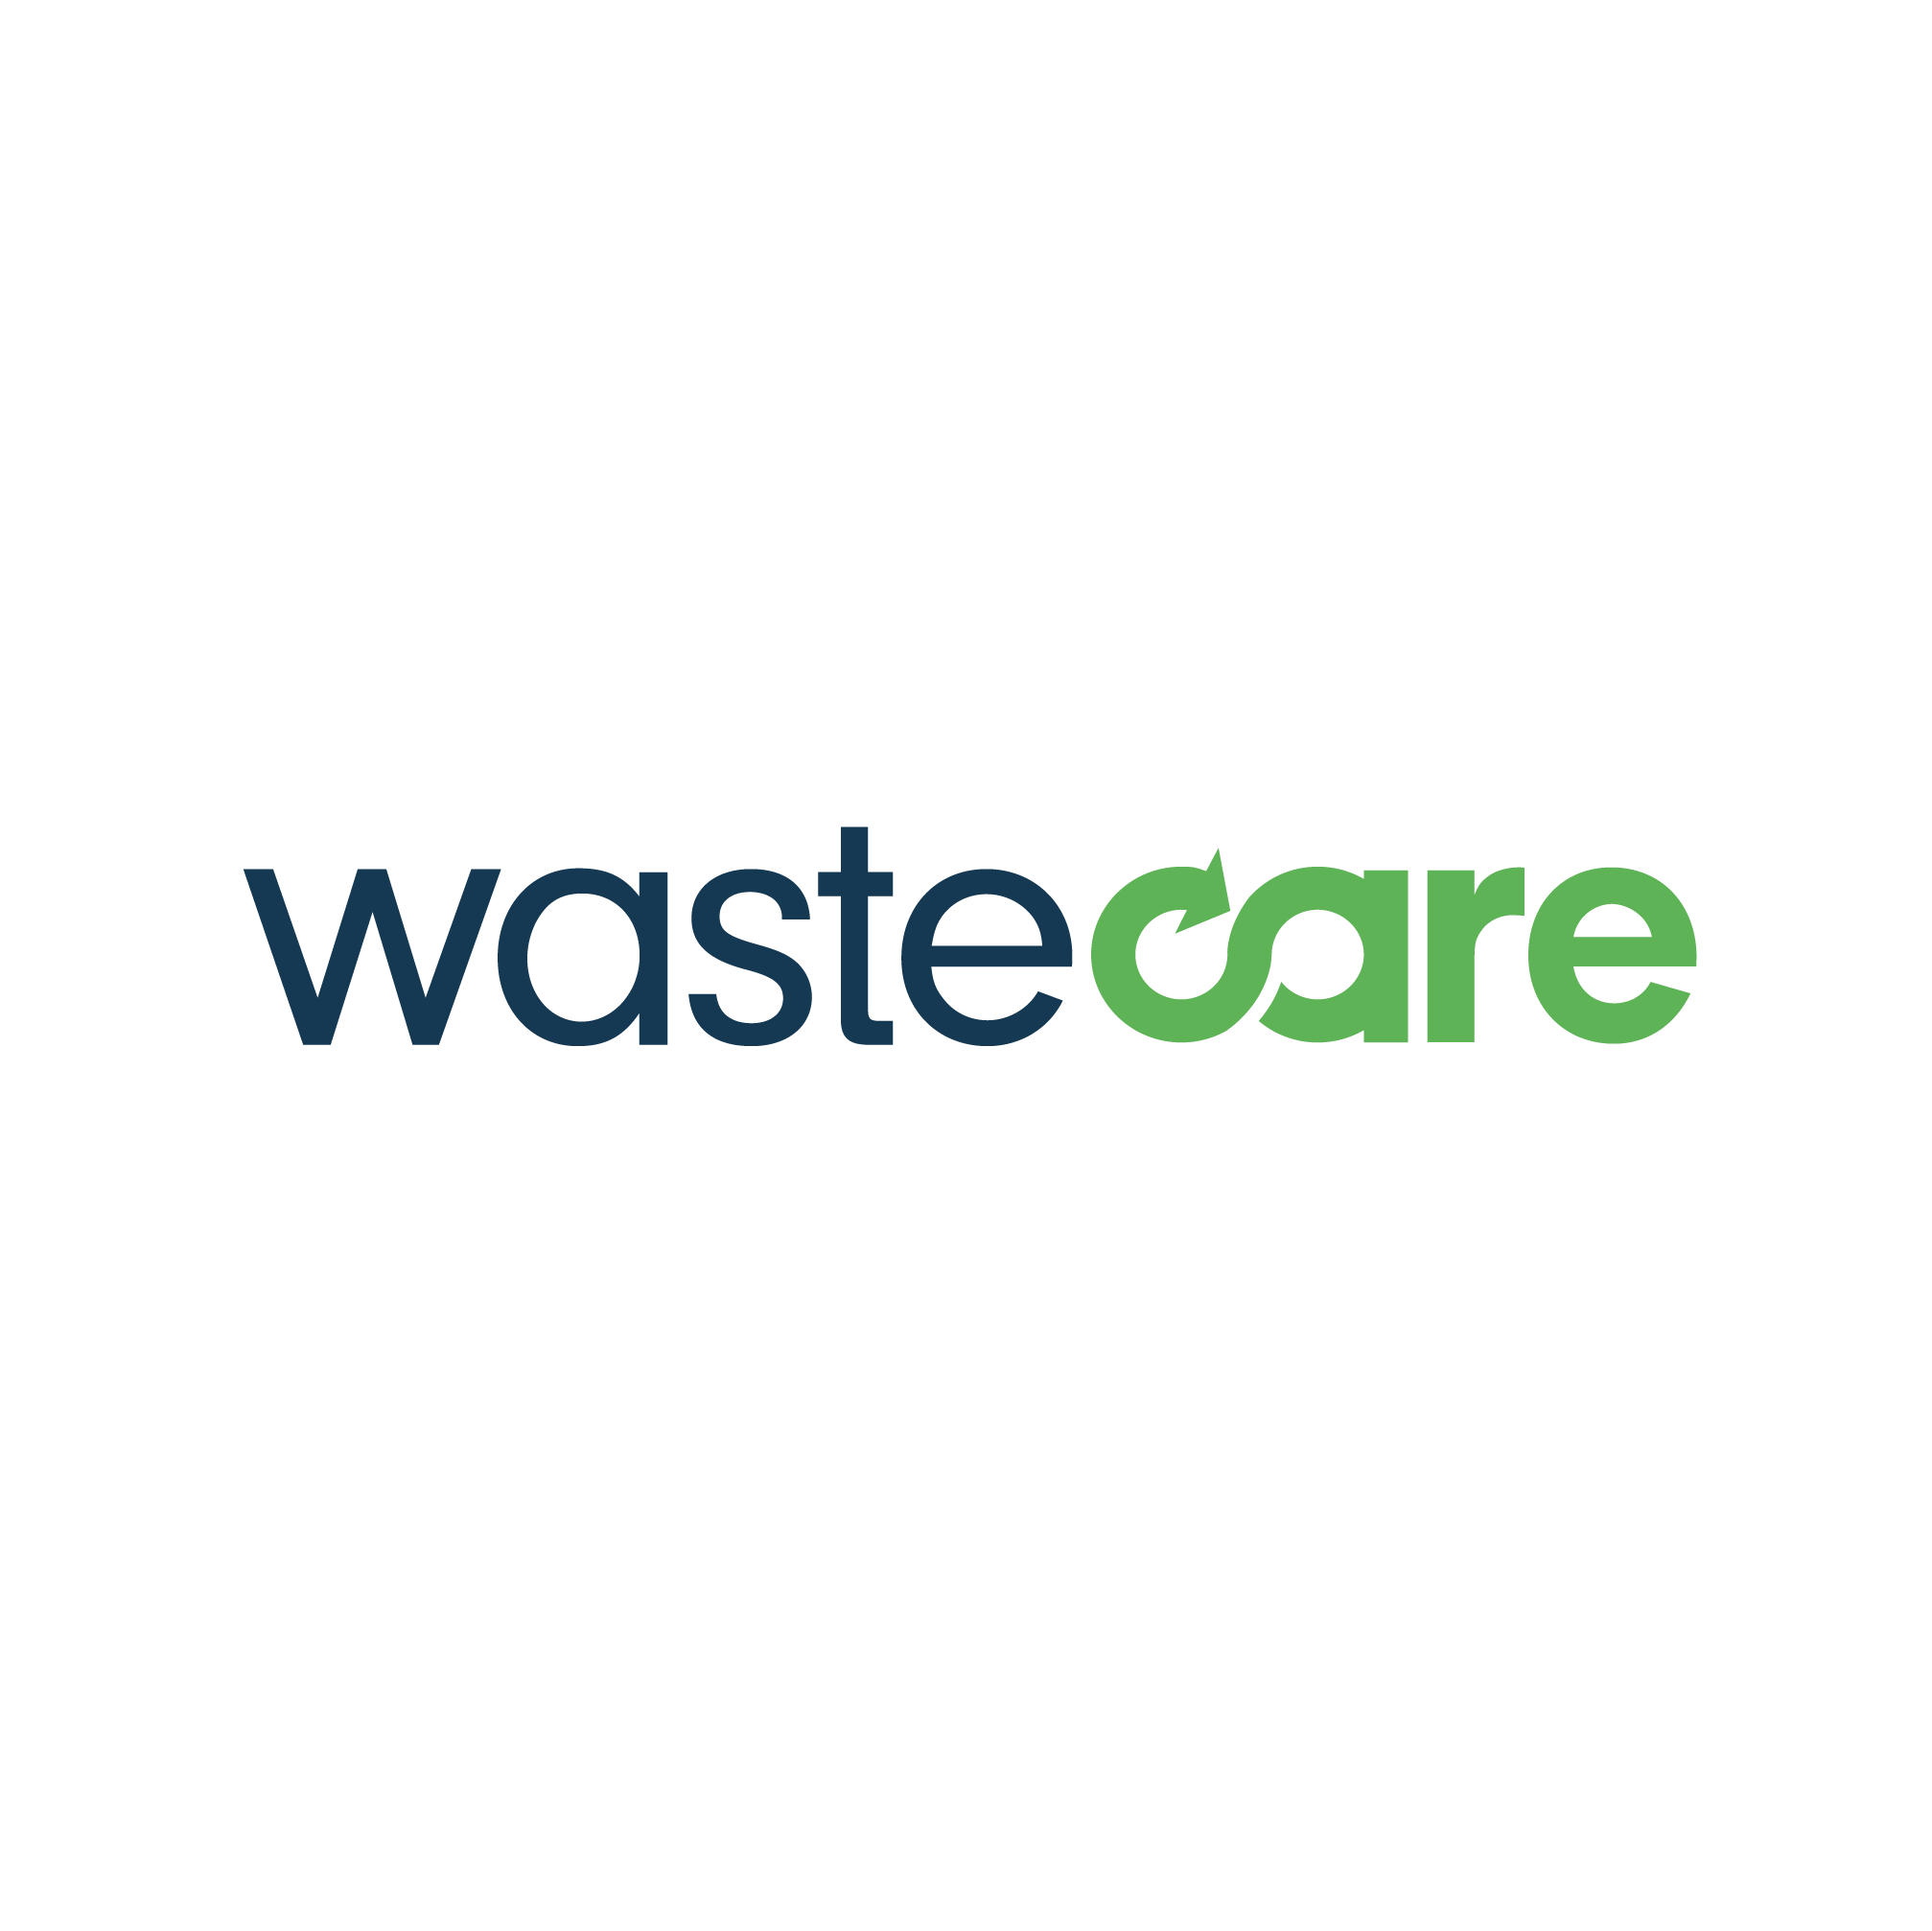 wastecare-logo_Wastecare-White-Square-002.png